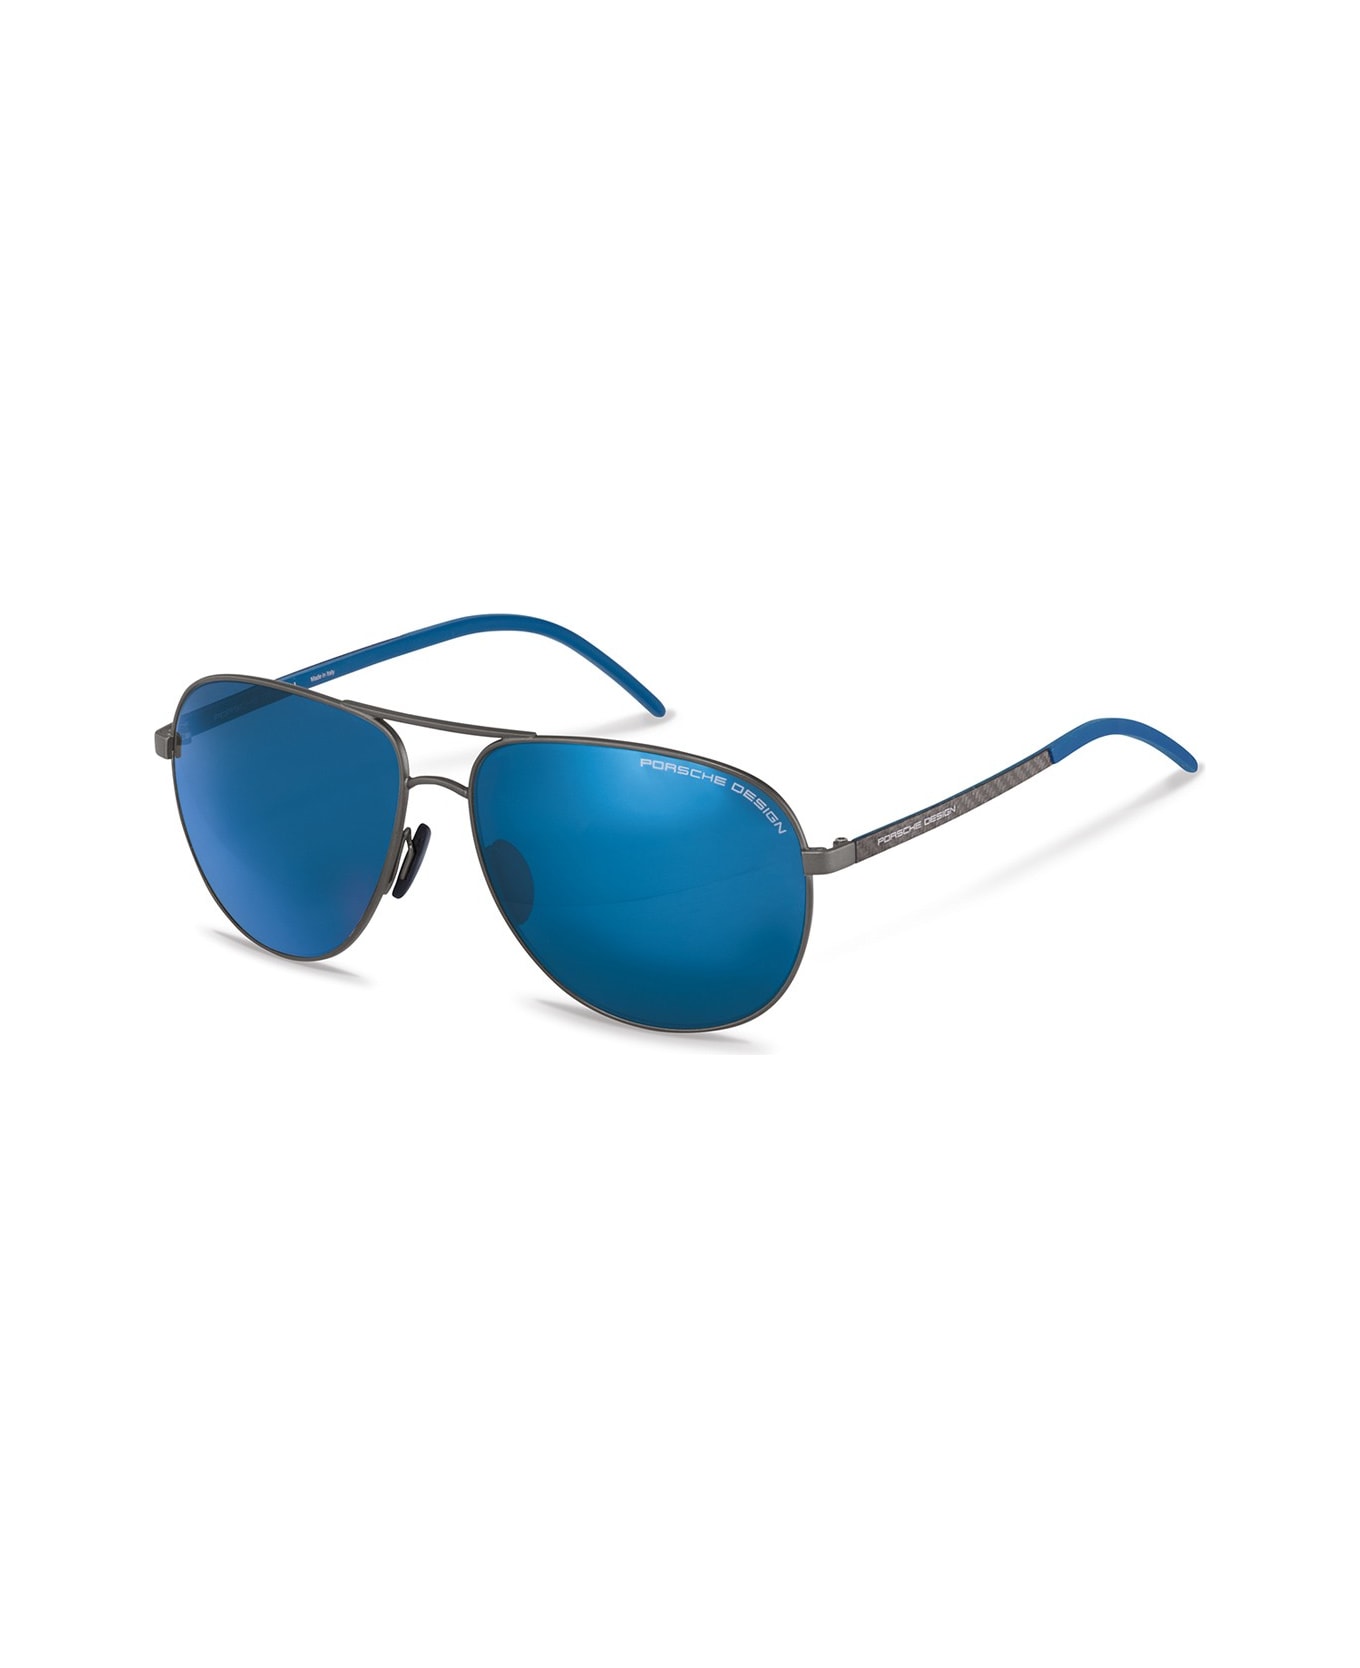 Porsche octagonal P8651 Sunglasses - Grigio